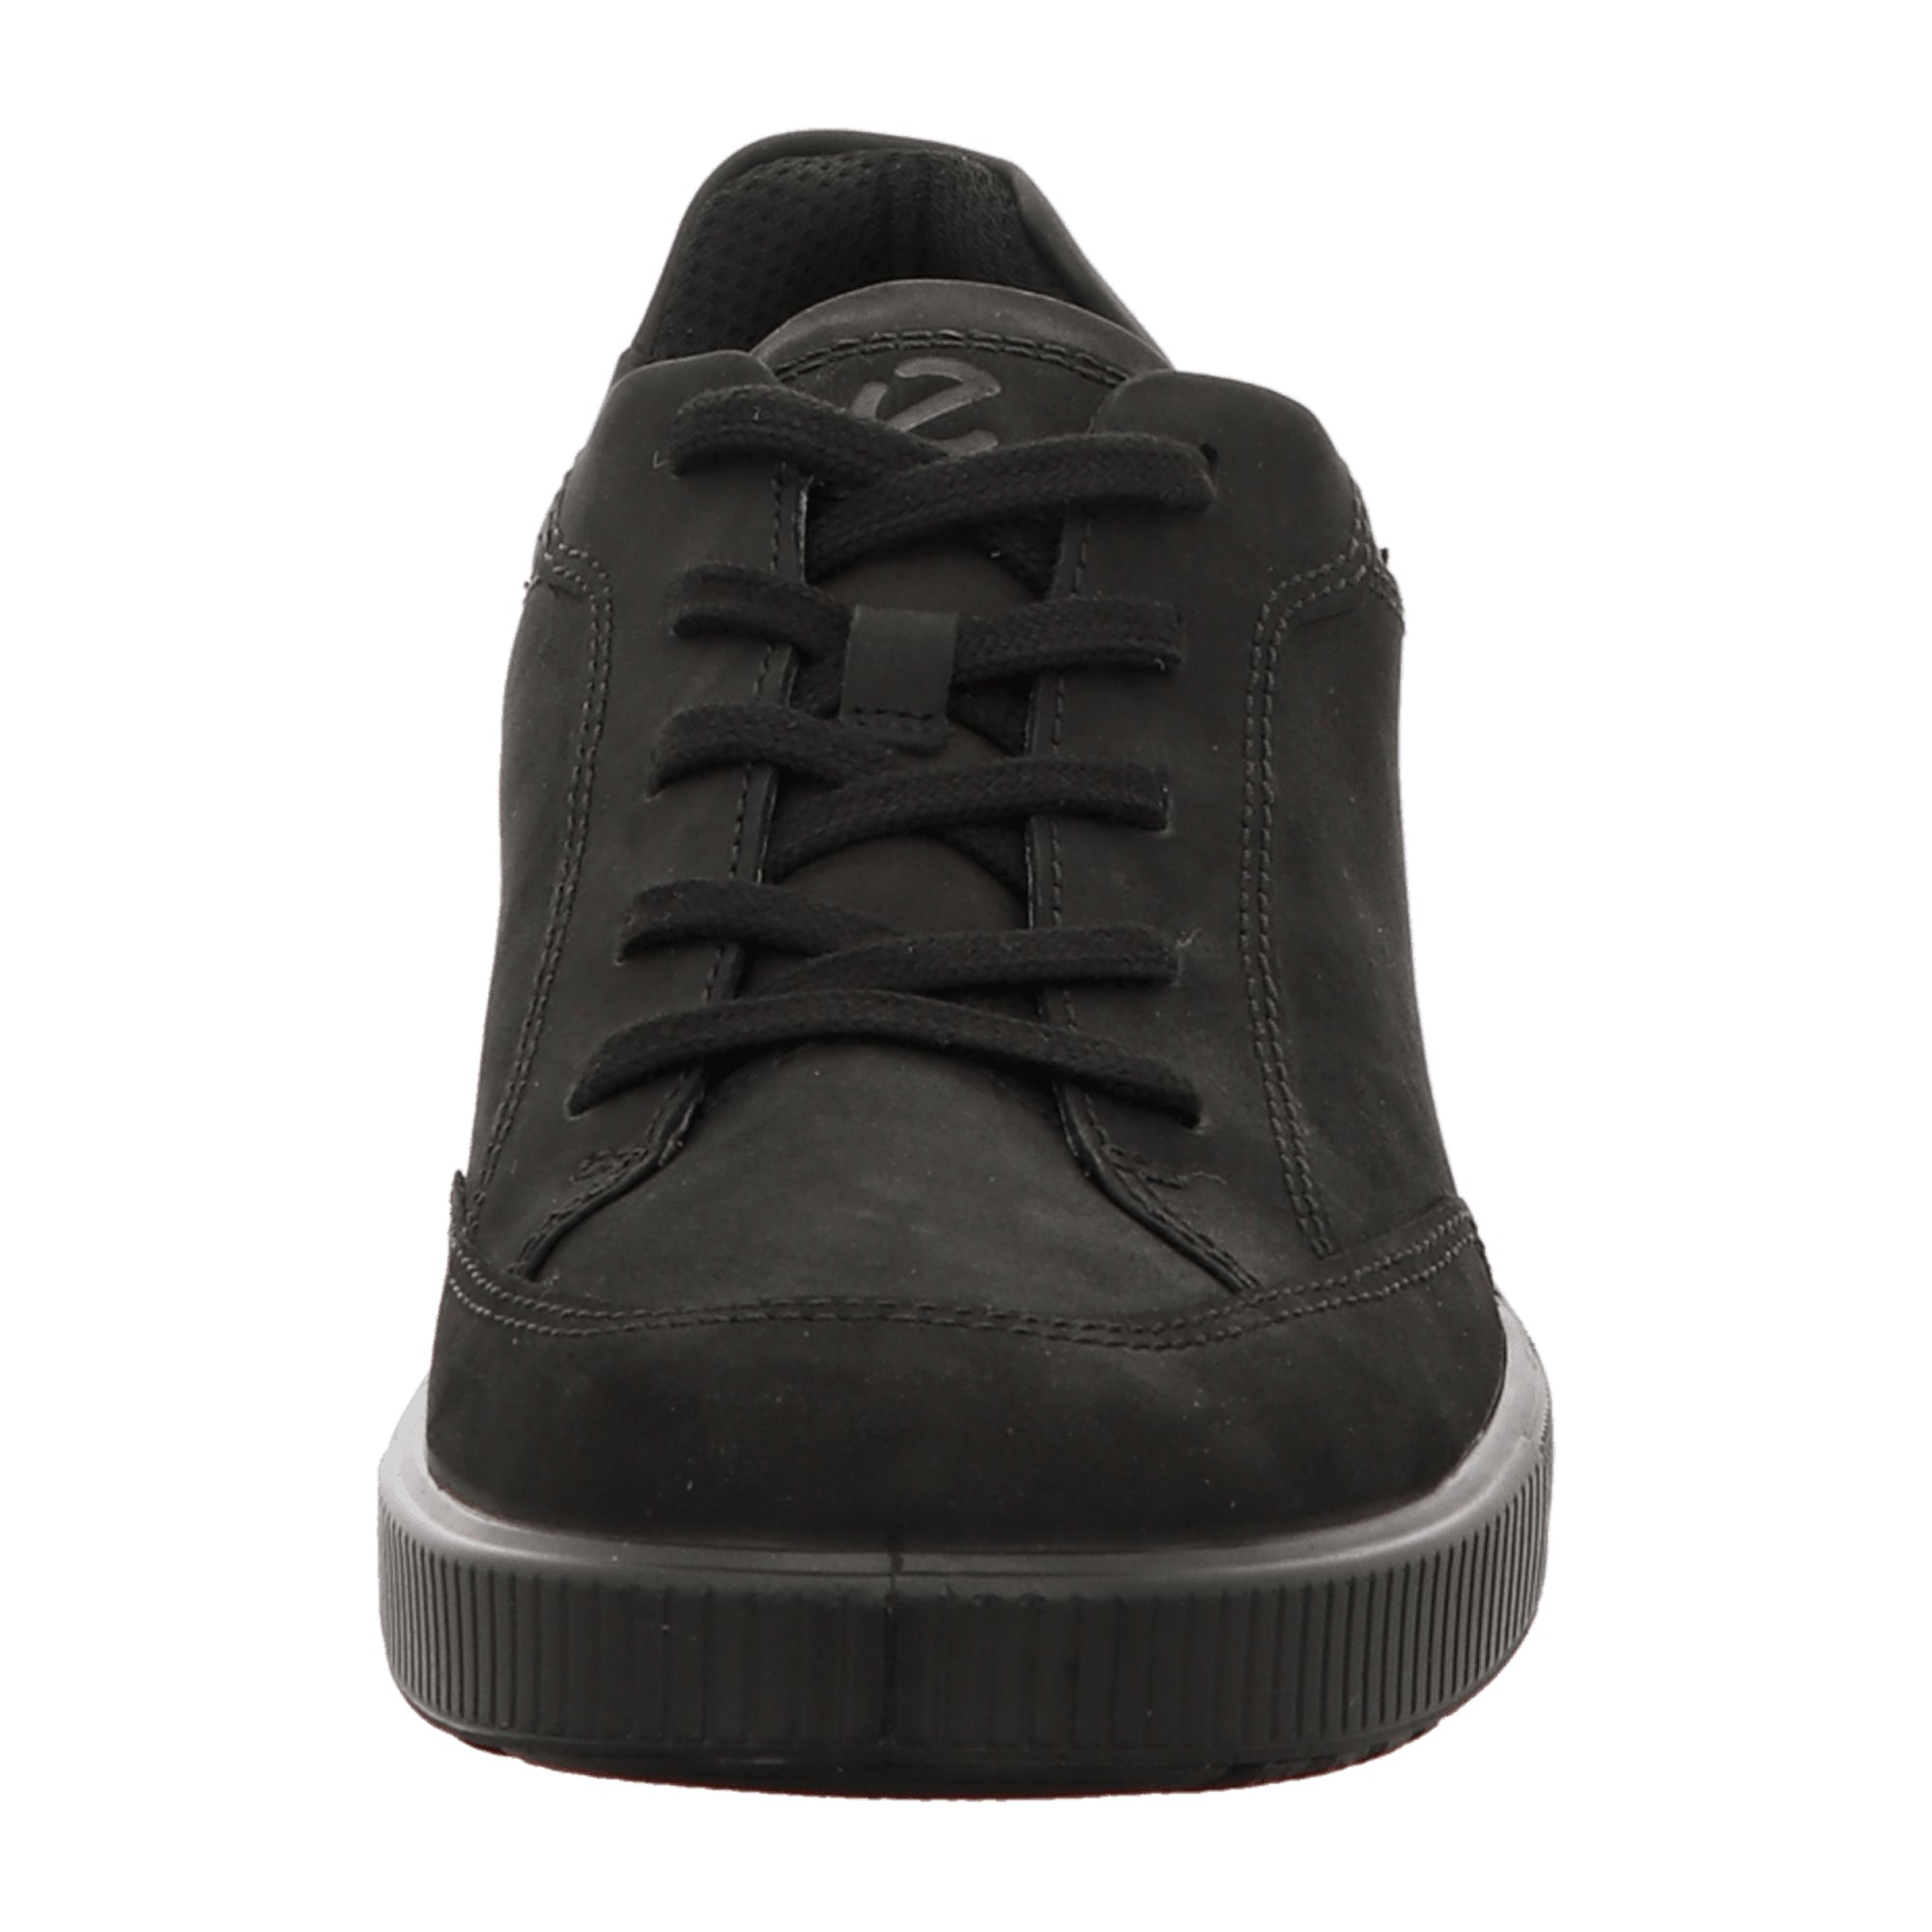 Ecco Ennio Men's Black Casual Shoes - Stylish & Durable